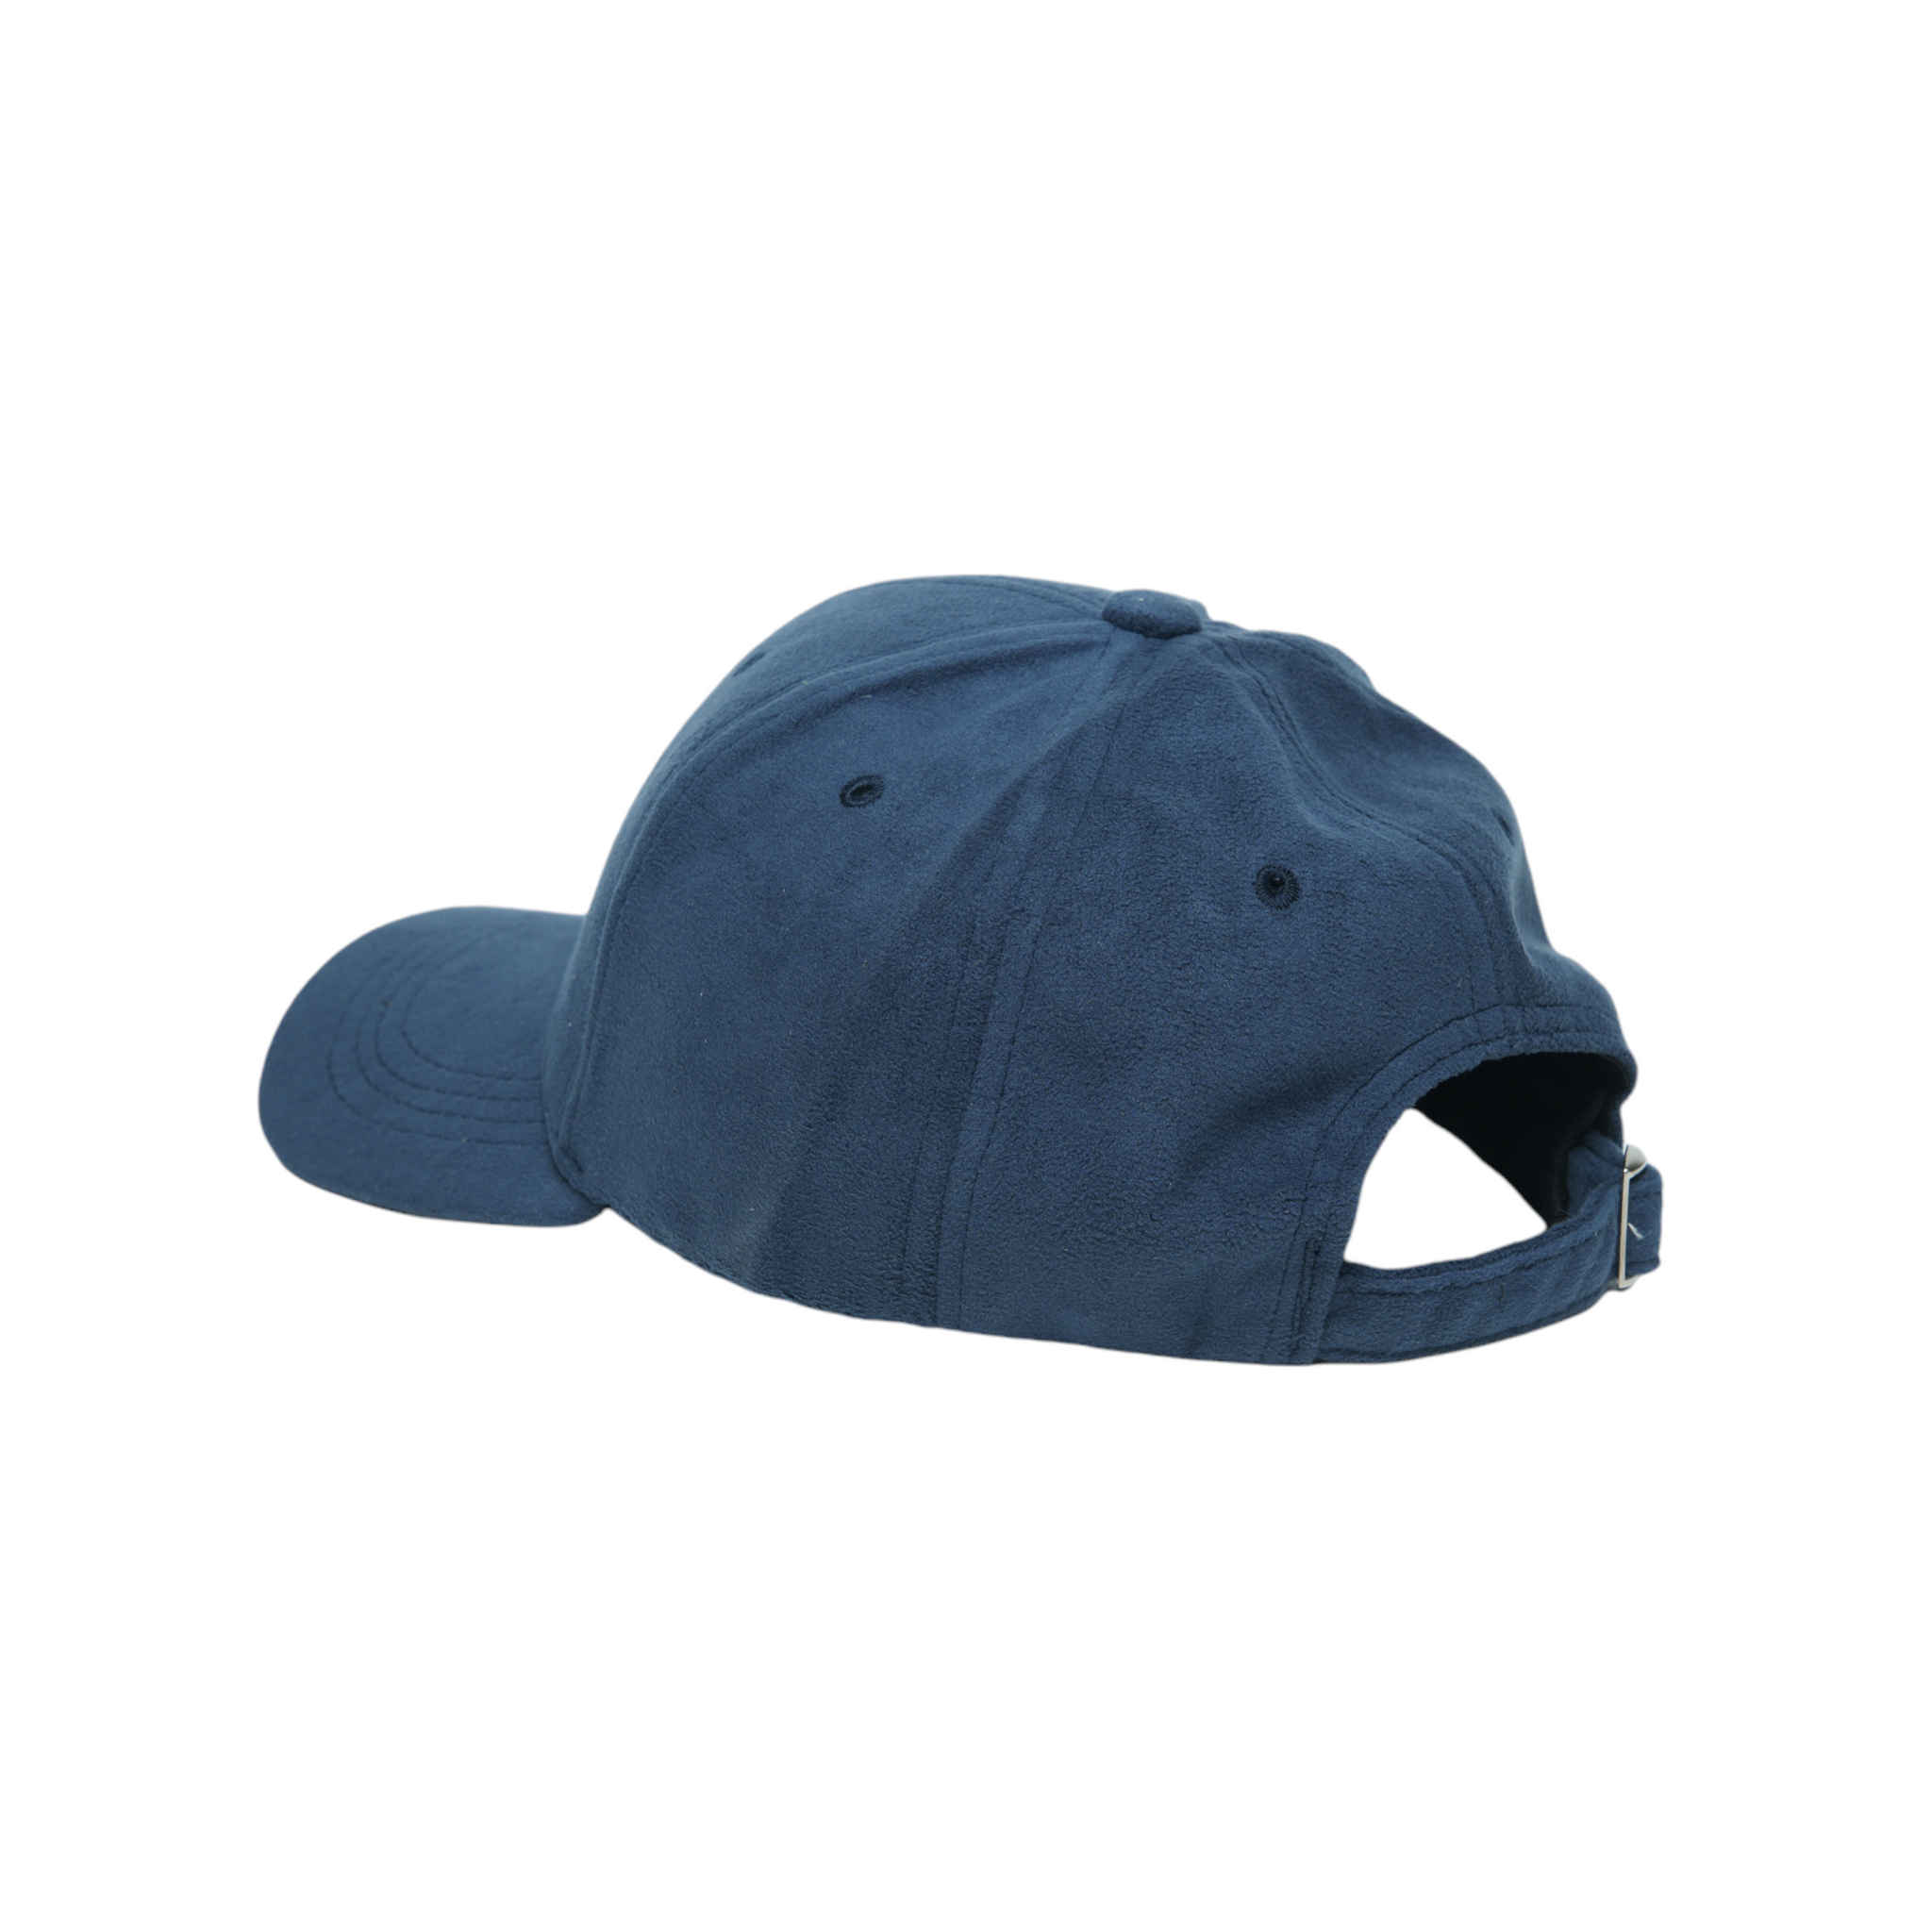 Chokore Structured Suede Baseball Cap (Navy Blue)